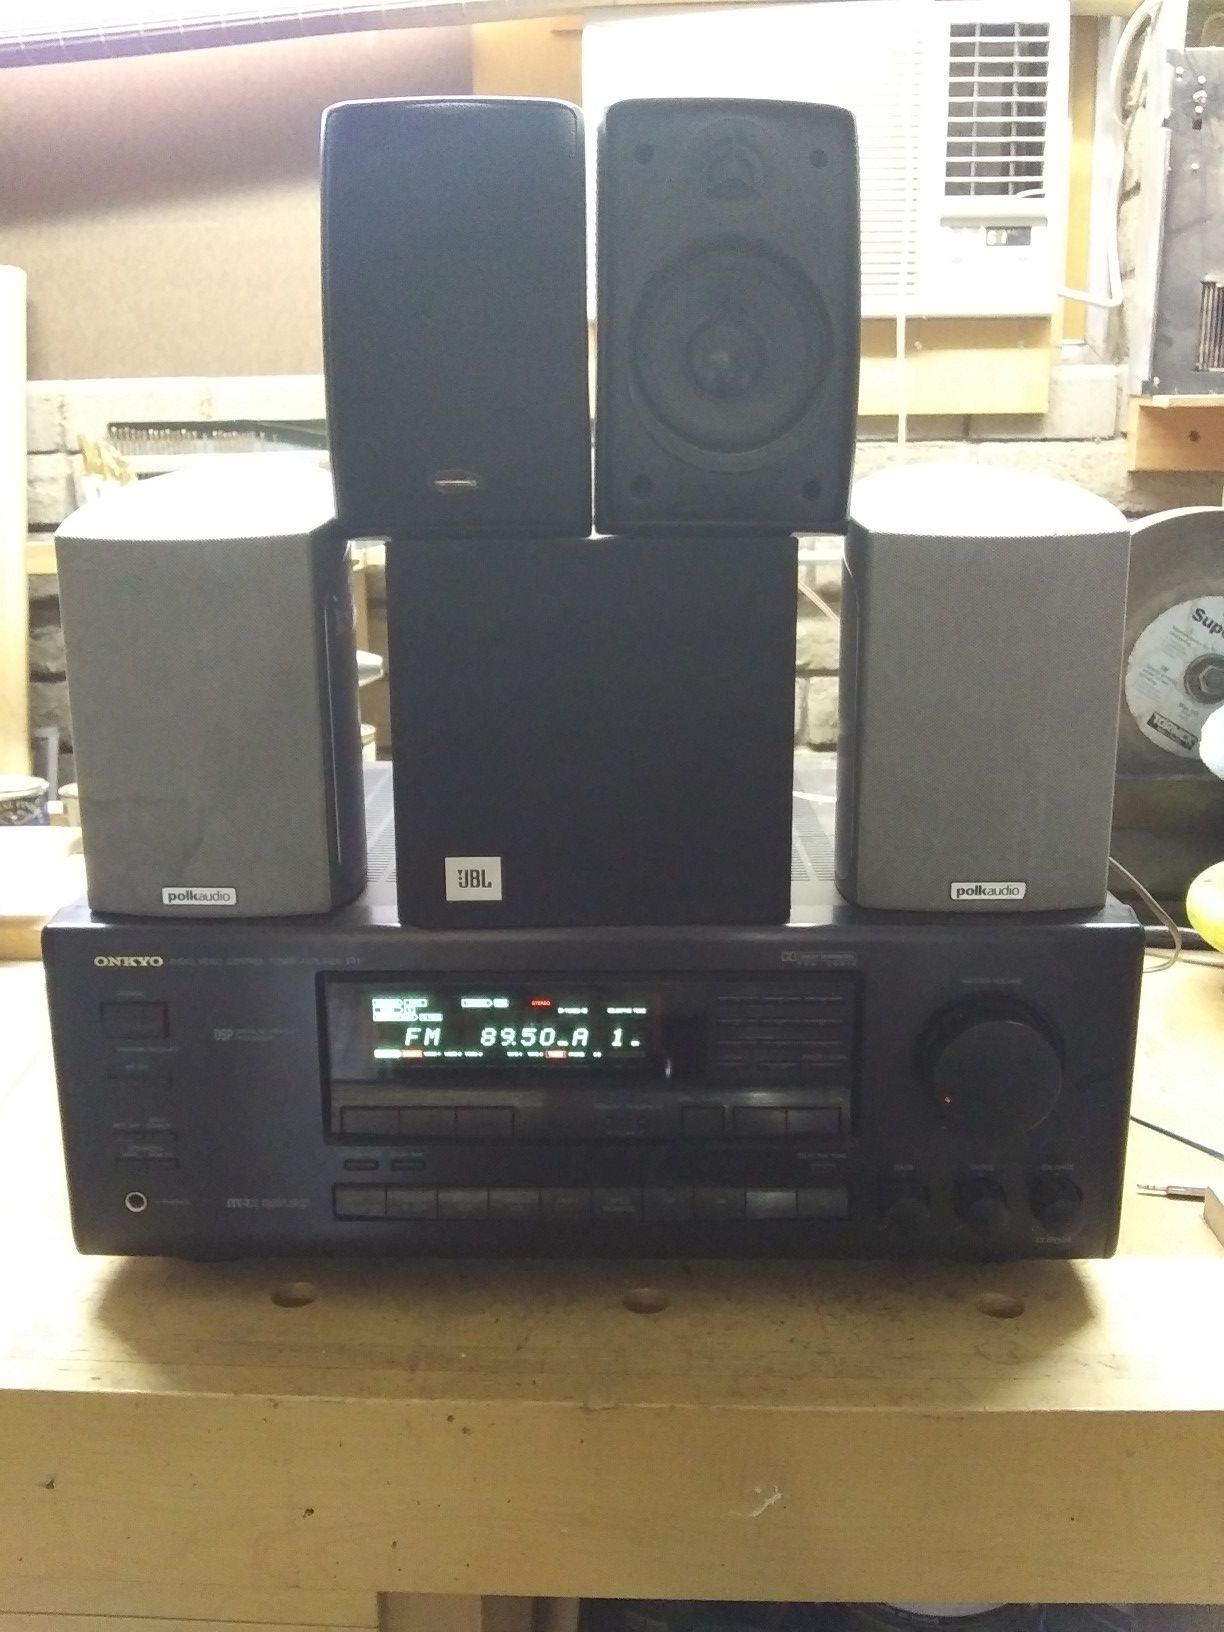 Onkyo receiver with surround sound speakers